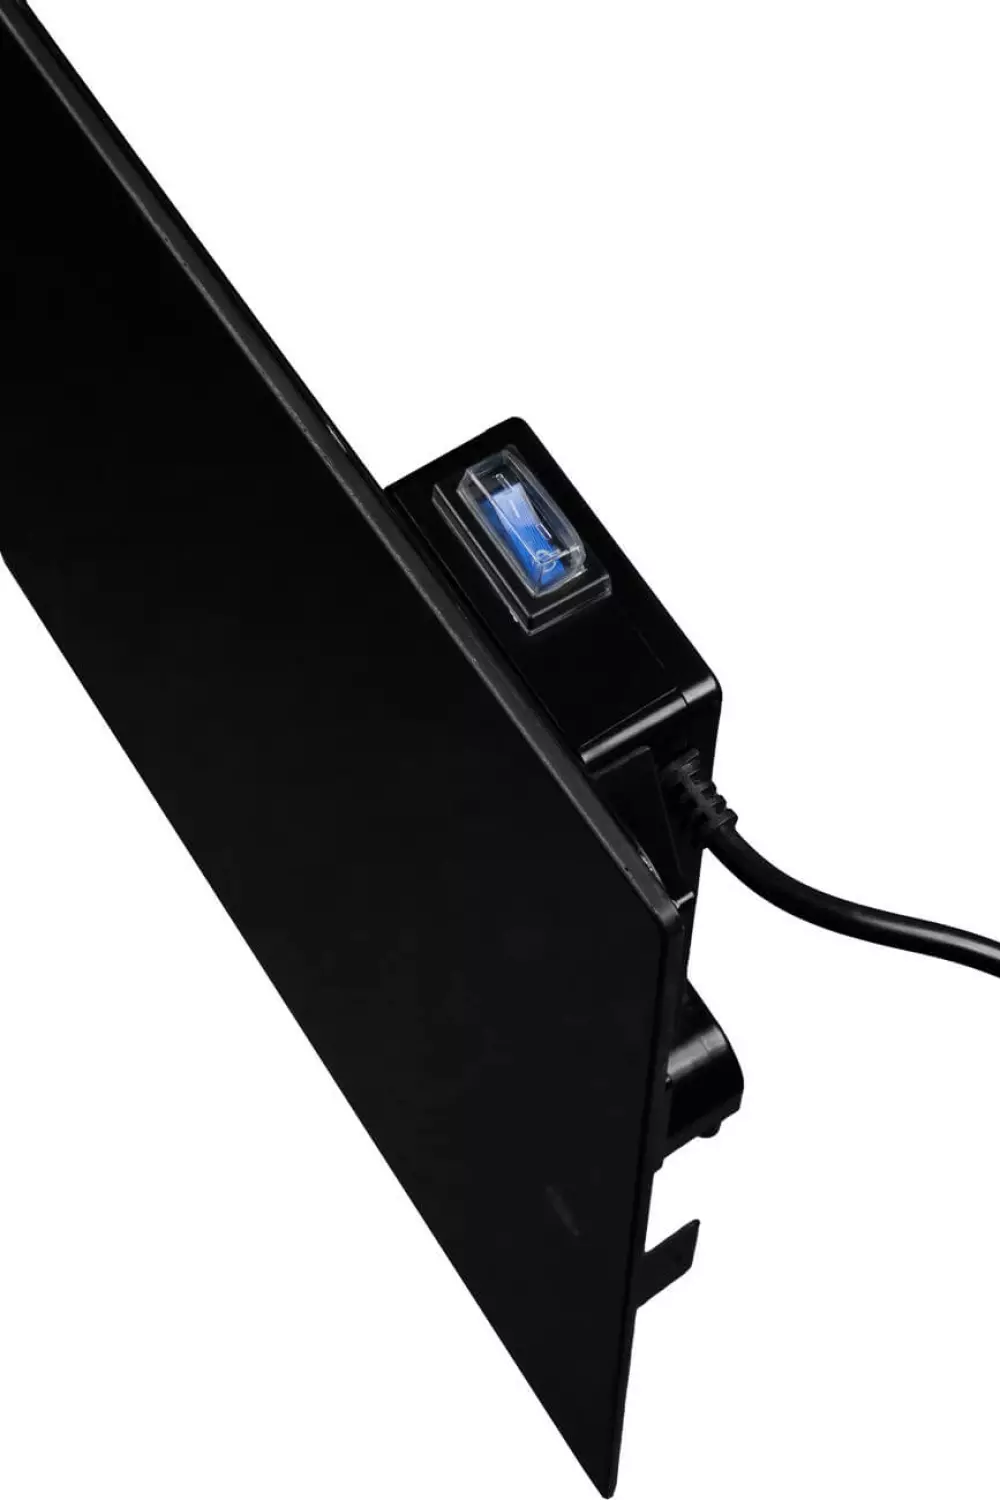 Eurom Sani 800 Wifi Panneau infrarouge noir - 800W - 13kg-image